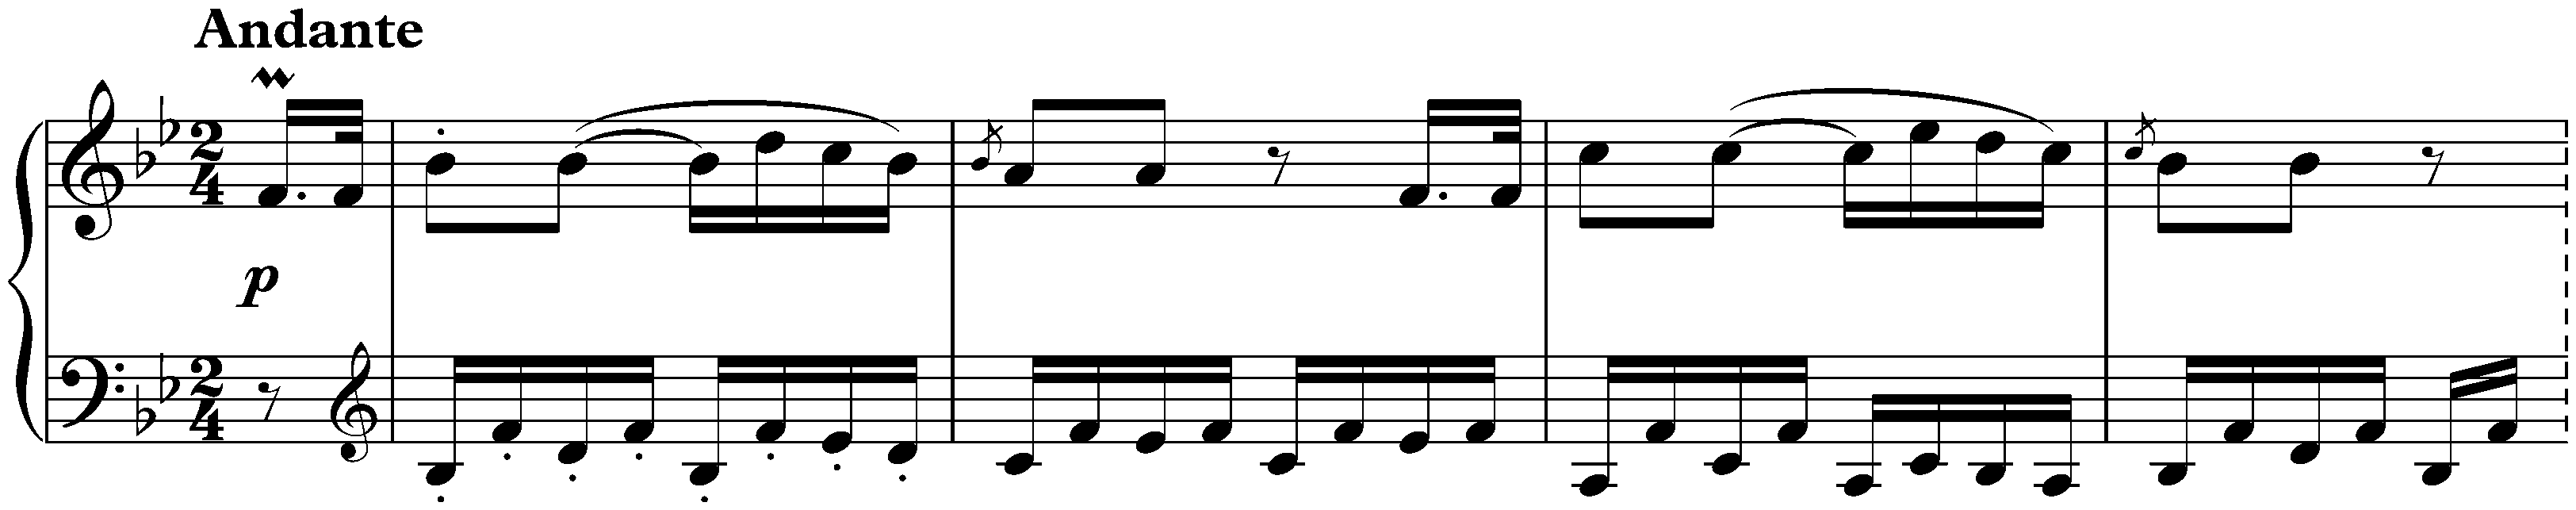 Sonata in E-flat major, WoO 47 no. 1; 2. Andante